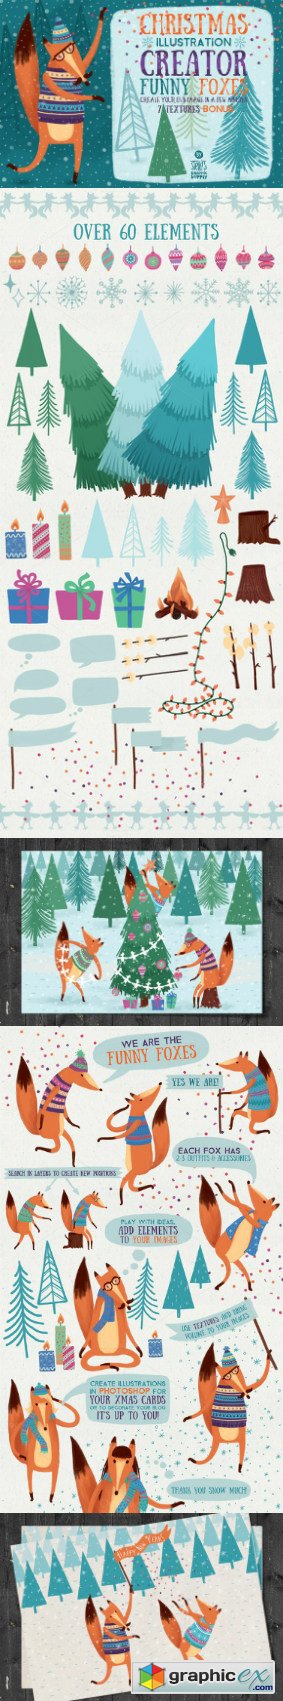 Christmas Illustration Creator Foxes